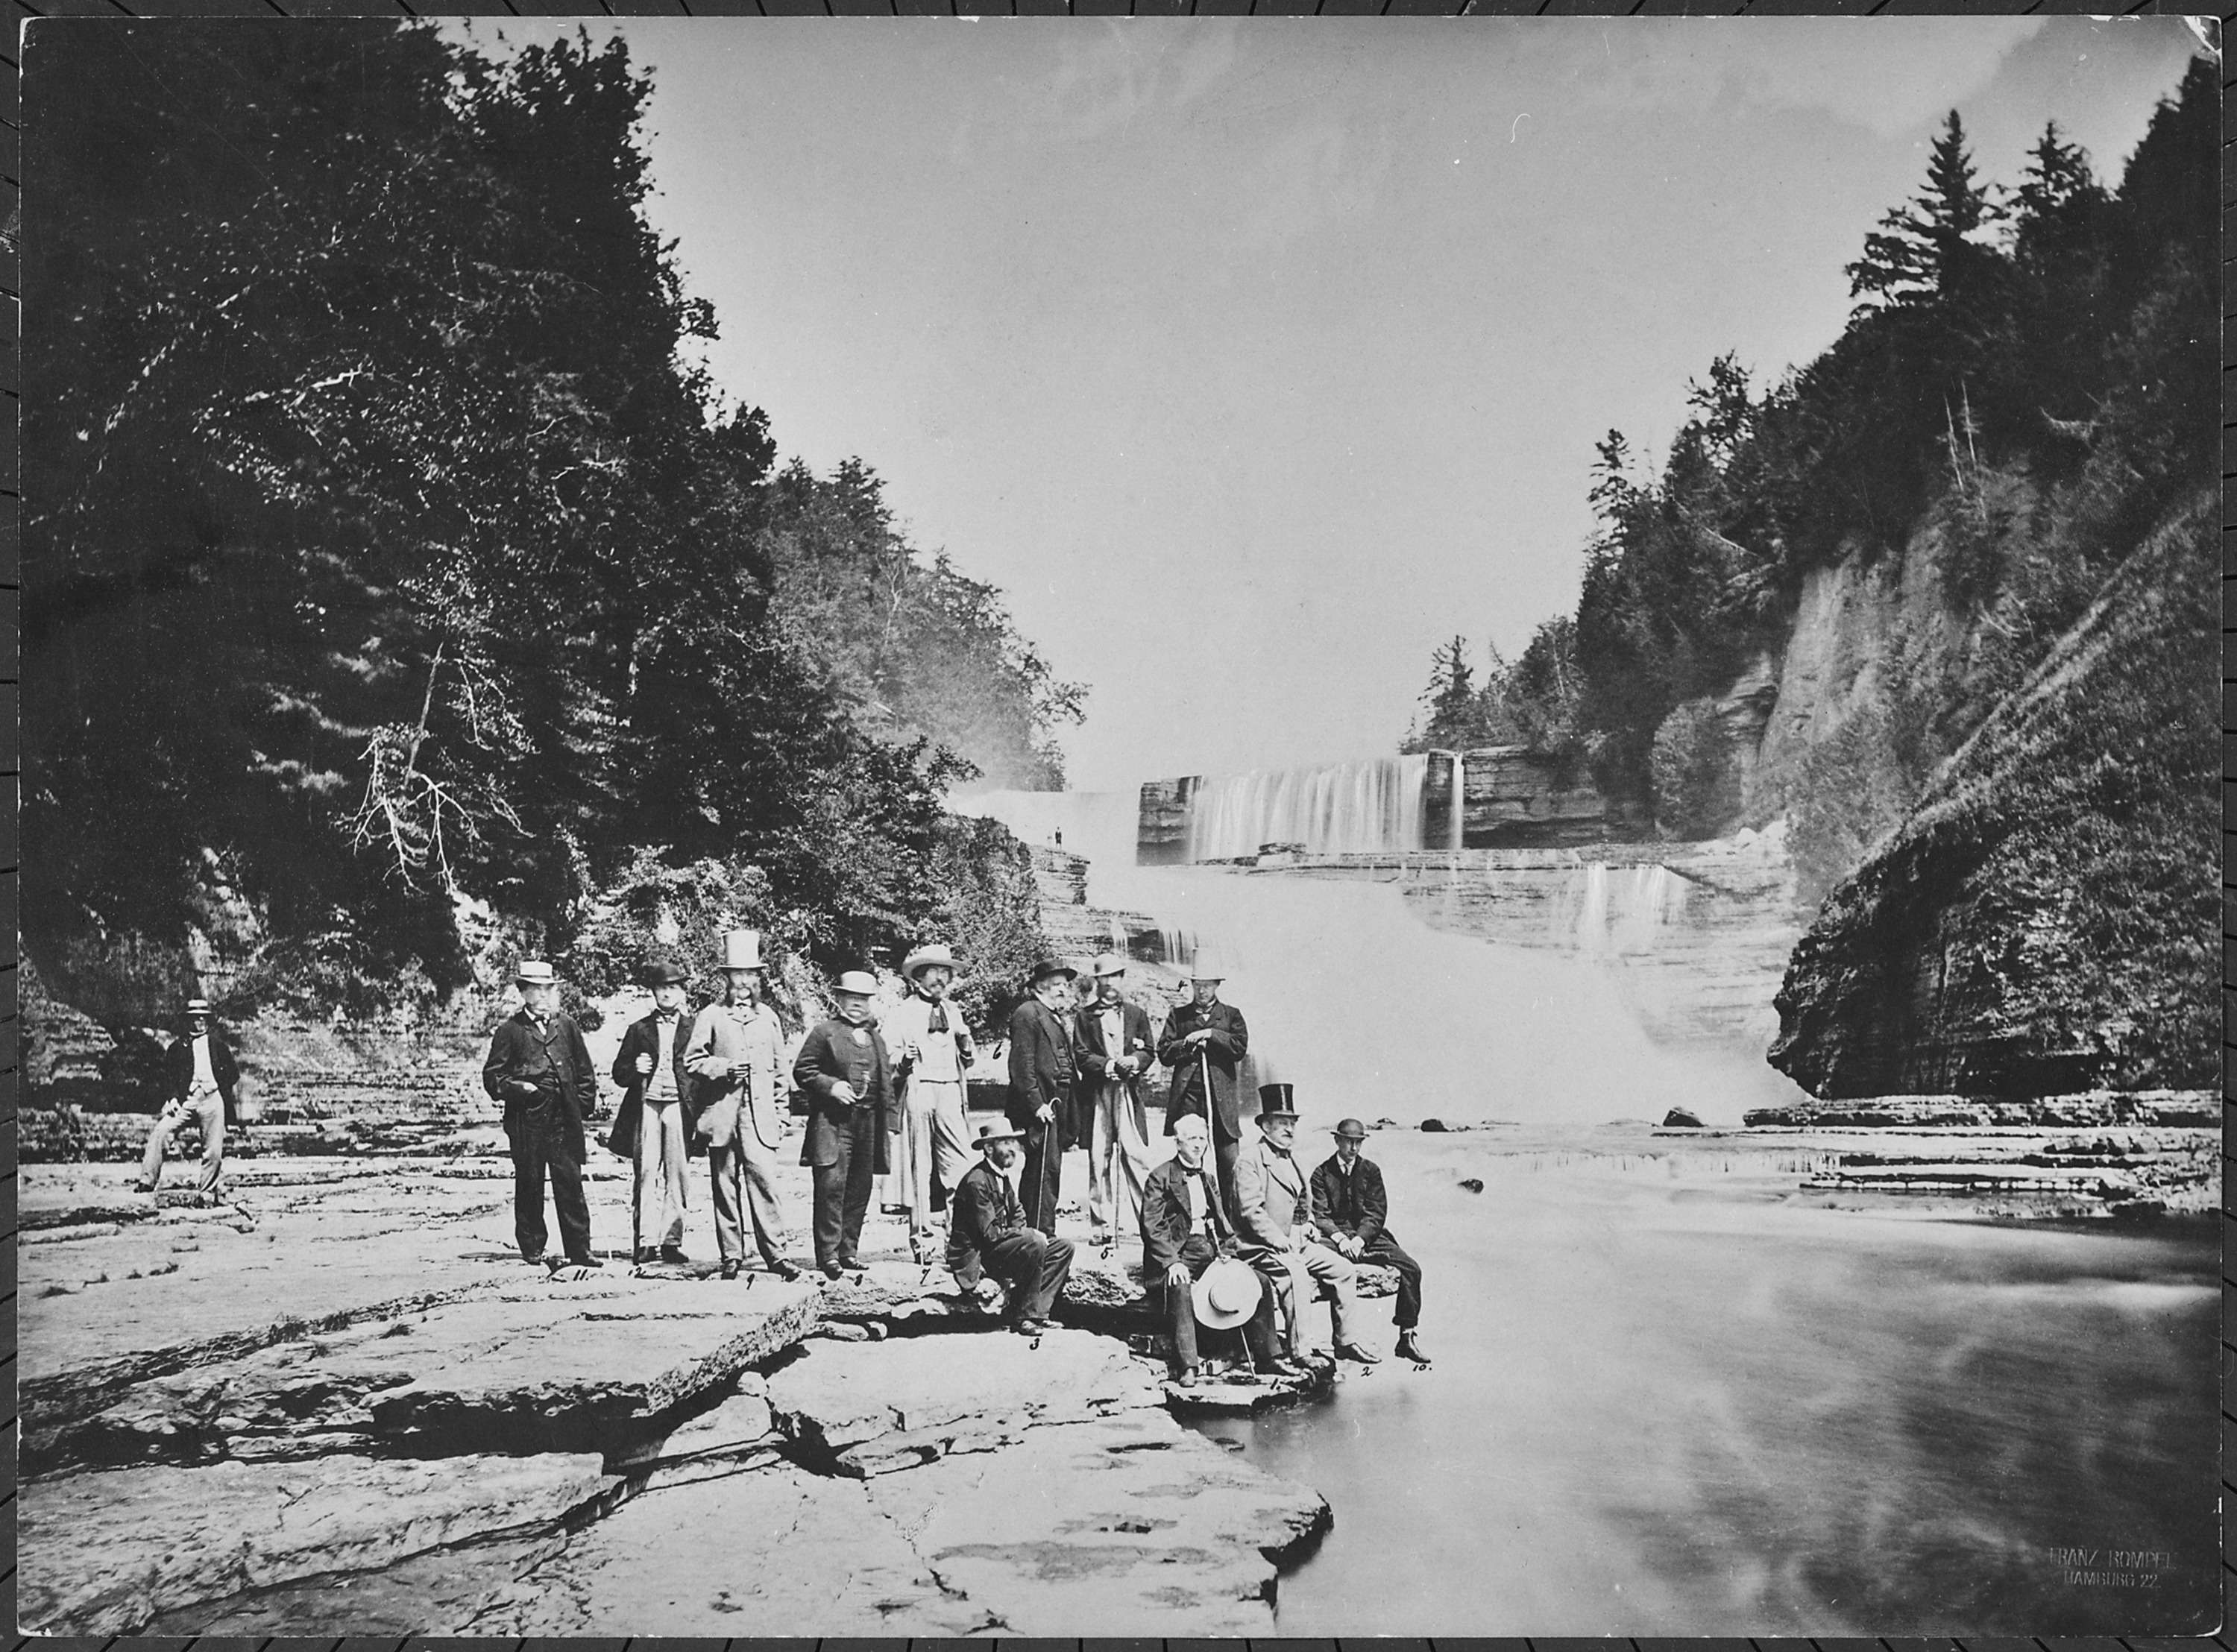 Diplomats at the foot of an unidentified waterfall, New York State, 08-1863 - NARA - 518056.jpg